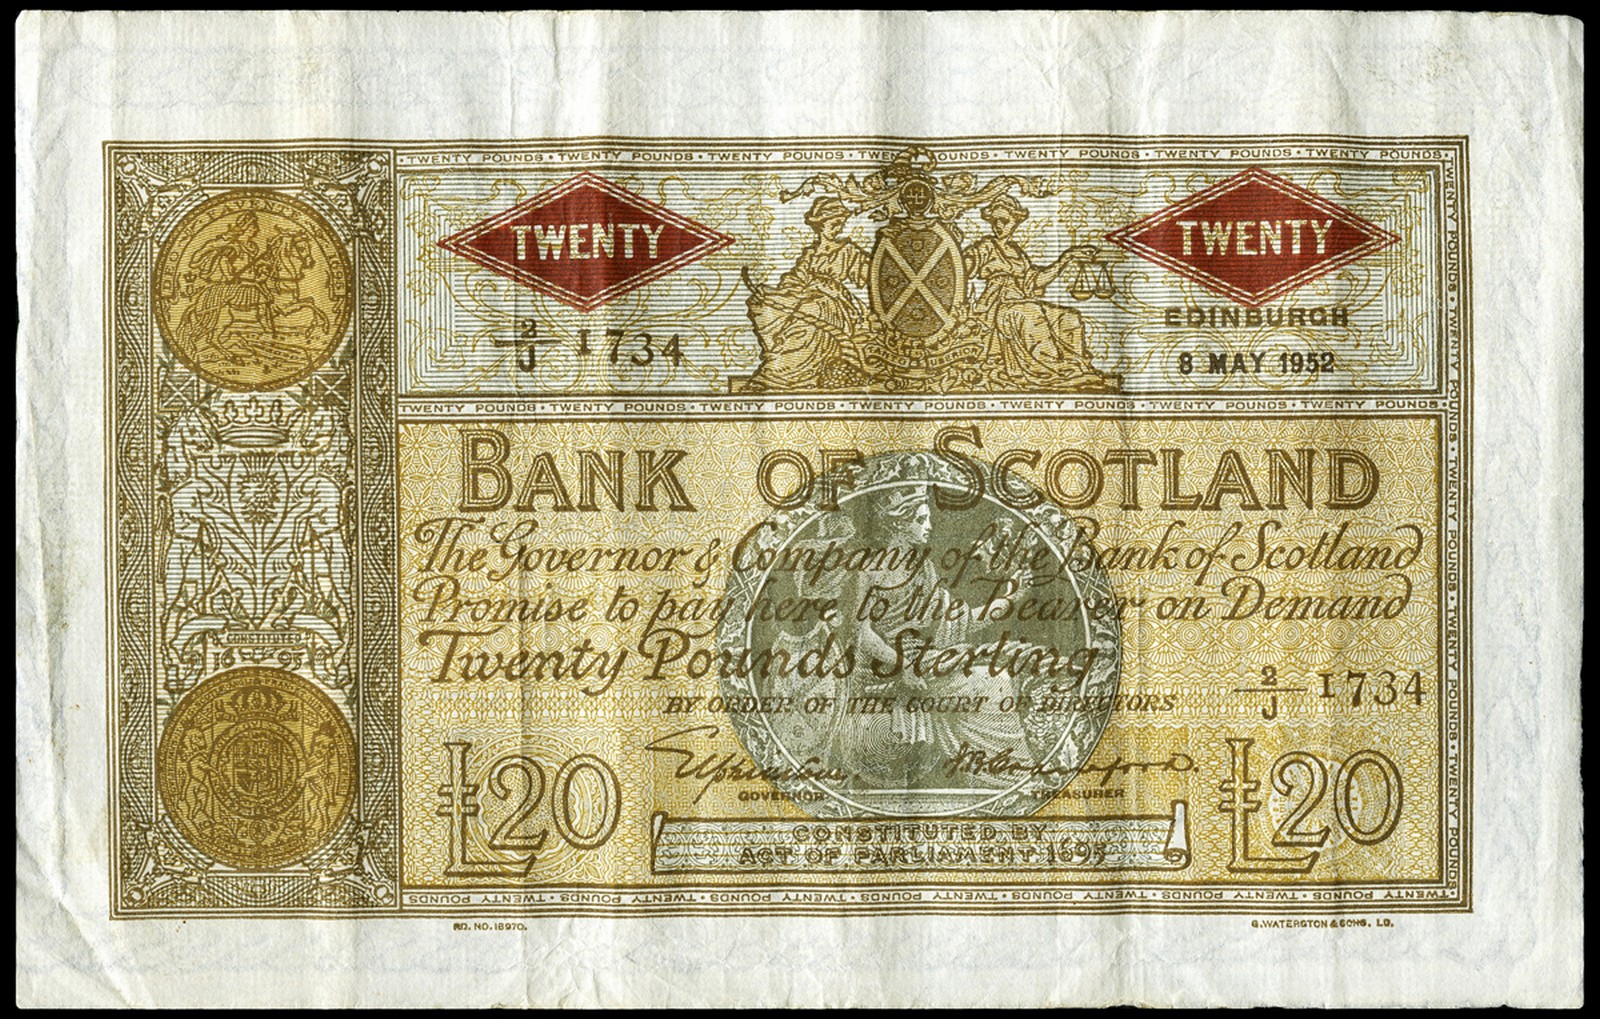 BRITISH BANKNOTES, Bank of Scotland, Twenty Pounds, 8 May 1952, 2/J 1734, Elphinstone-Crawford